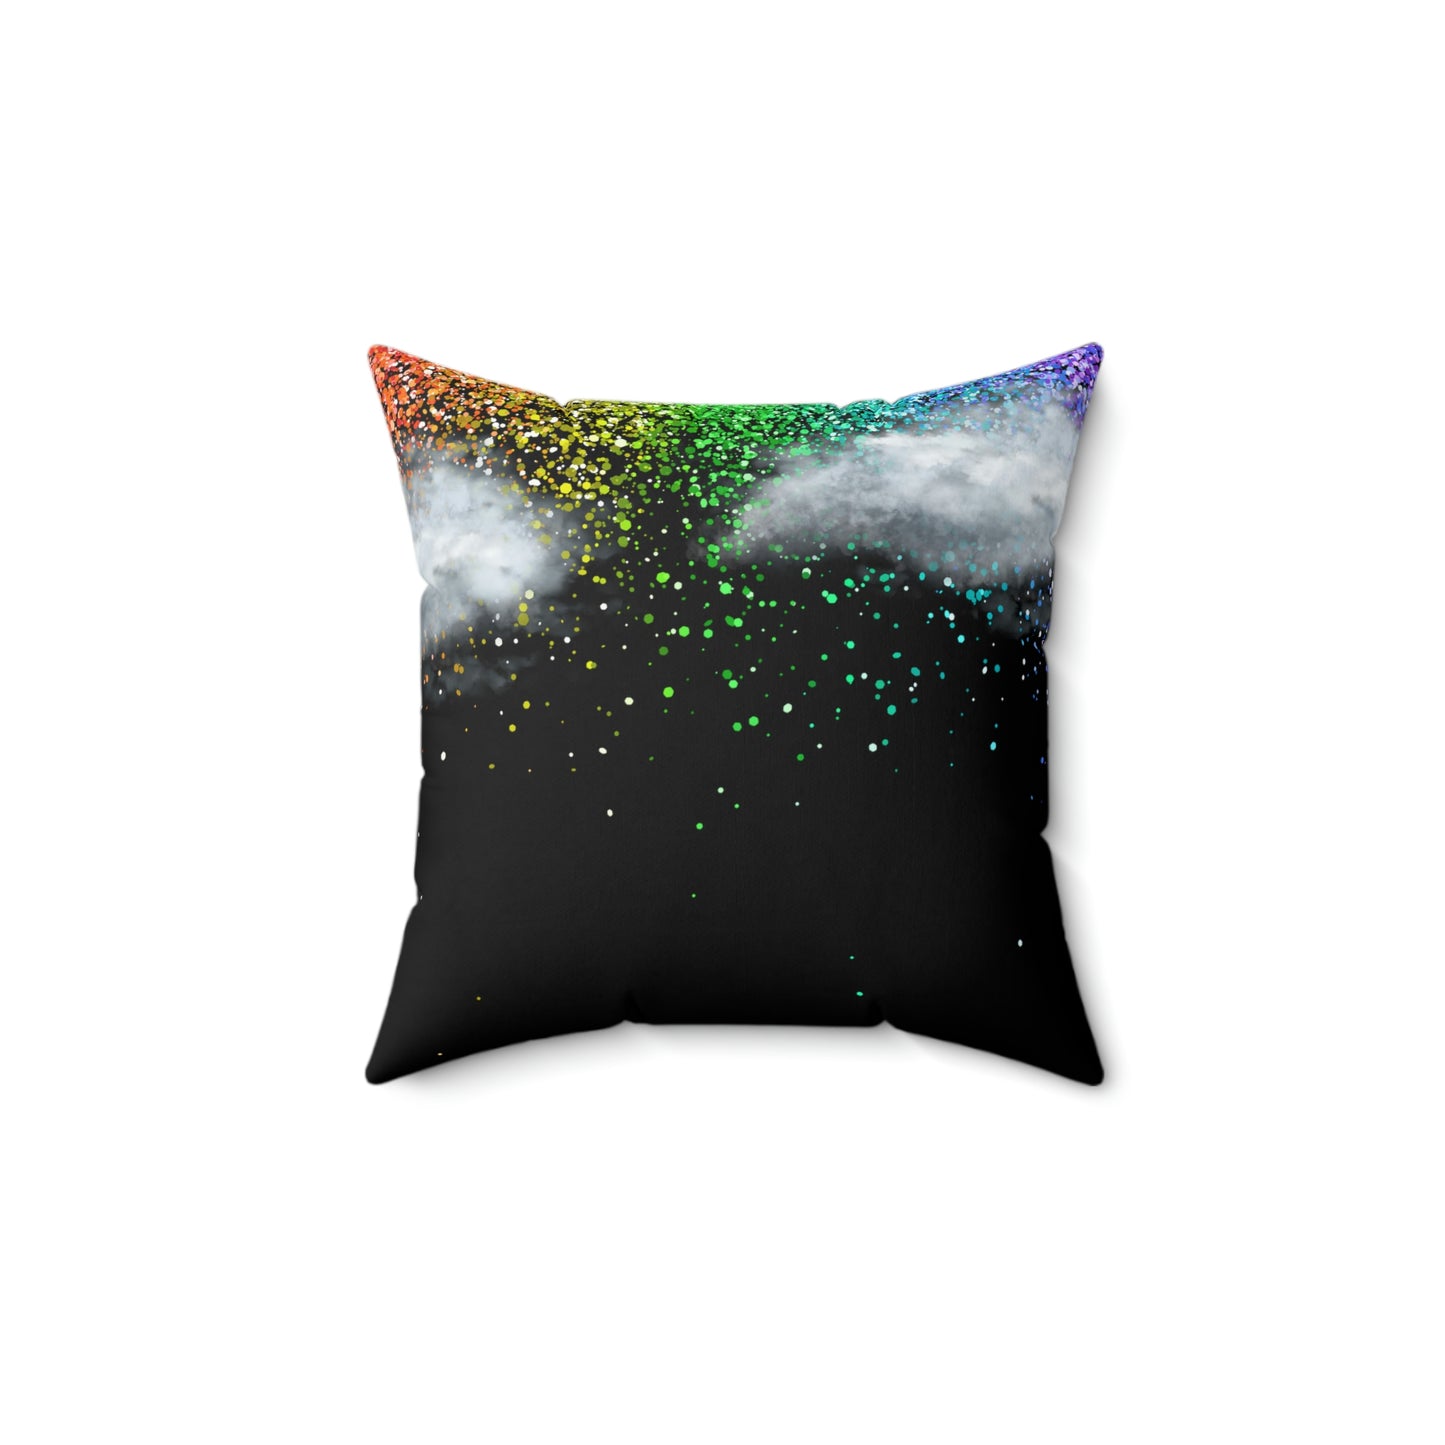 Rainbow, Raining Rainbow, Clouds, Sparkles- Square Black Pillow